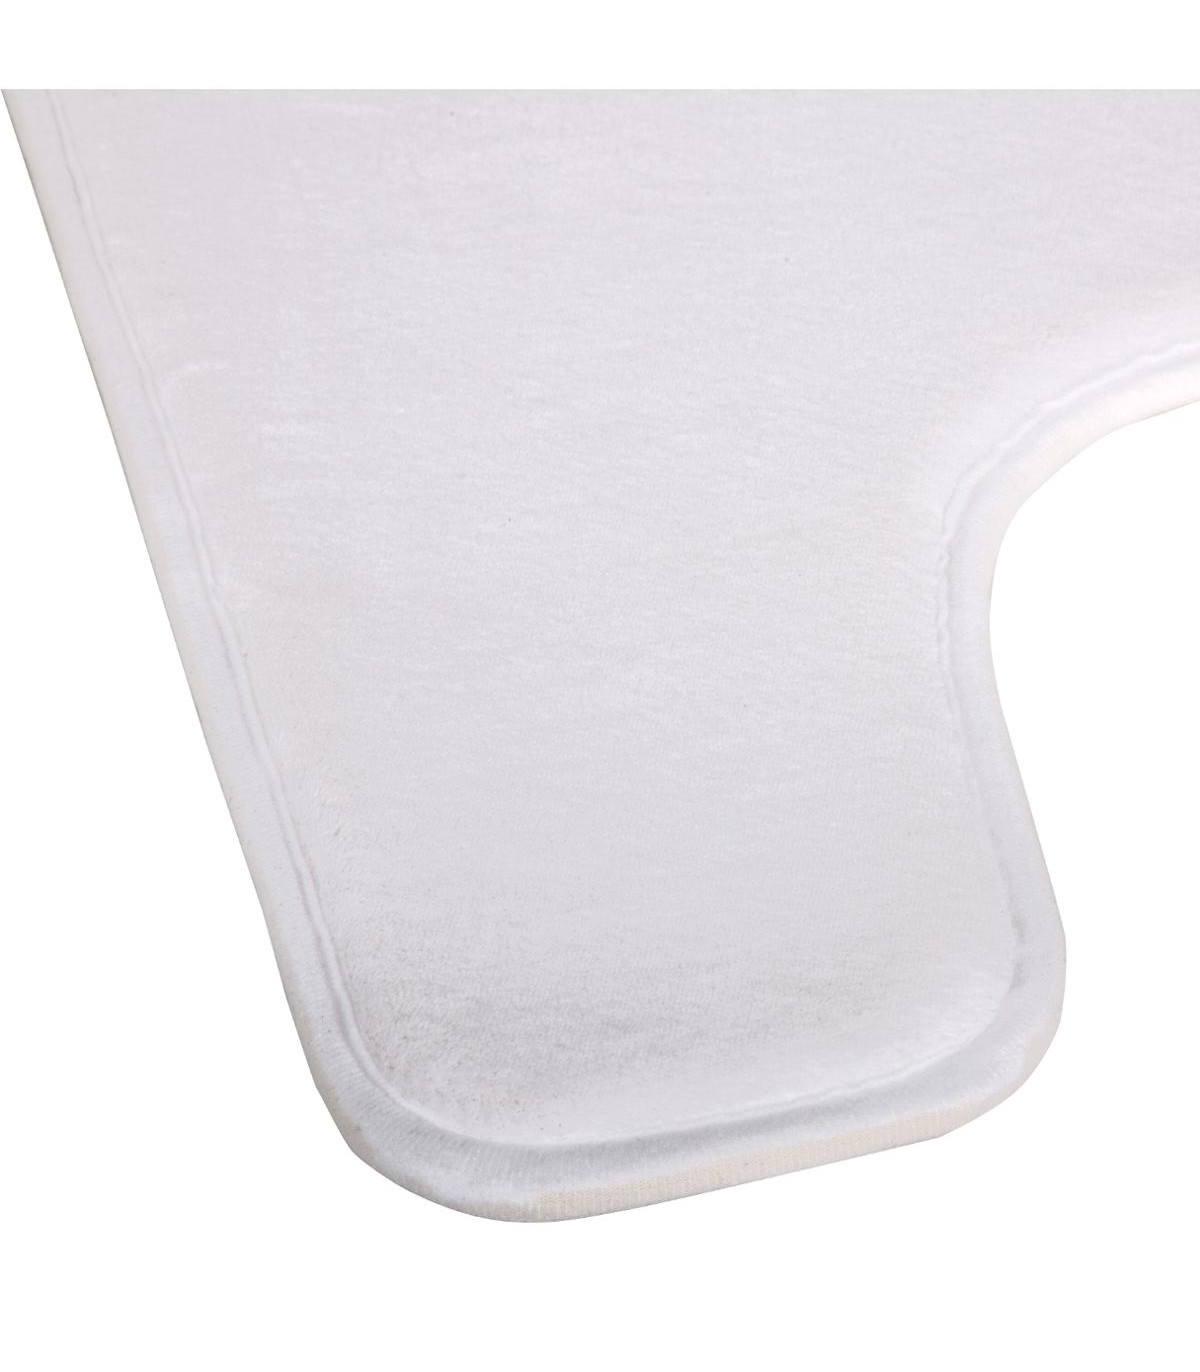 Tapis contour WC polyester 45 x 50 cm blanc - Mr Bricolage